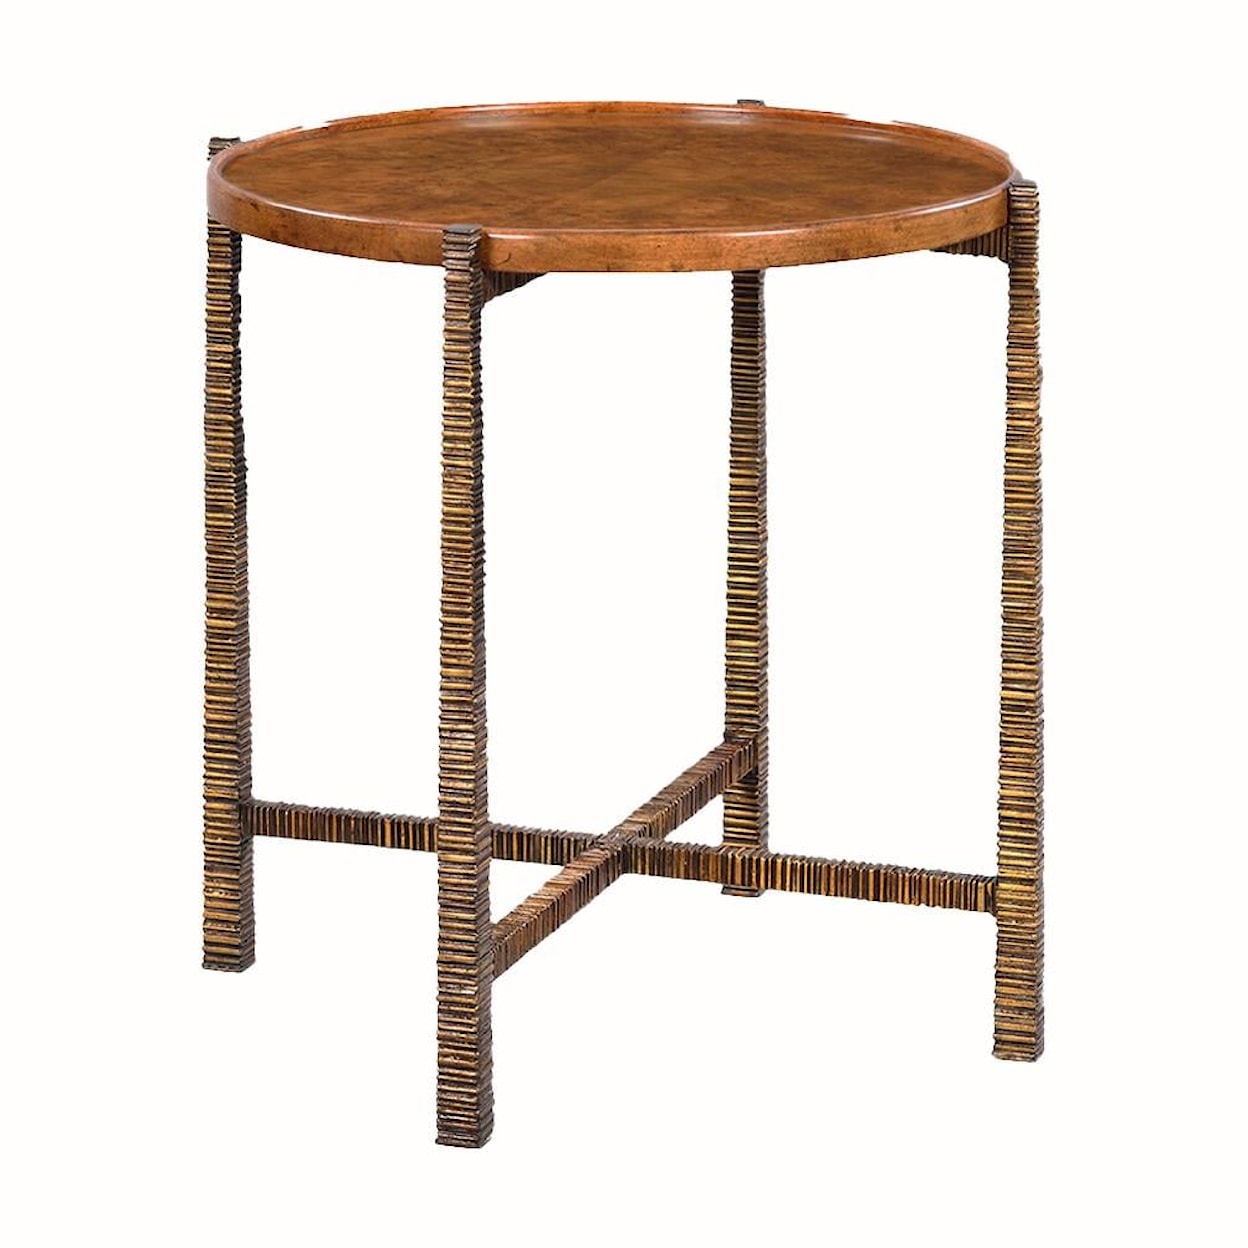 Oliver Home Furnishings End/ Side Tables BURL TOP, ROUND SIDE TABLE- BURNISHED BURL